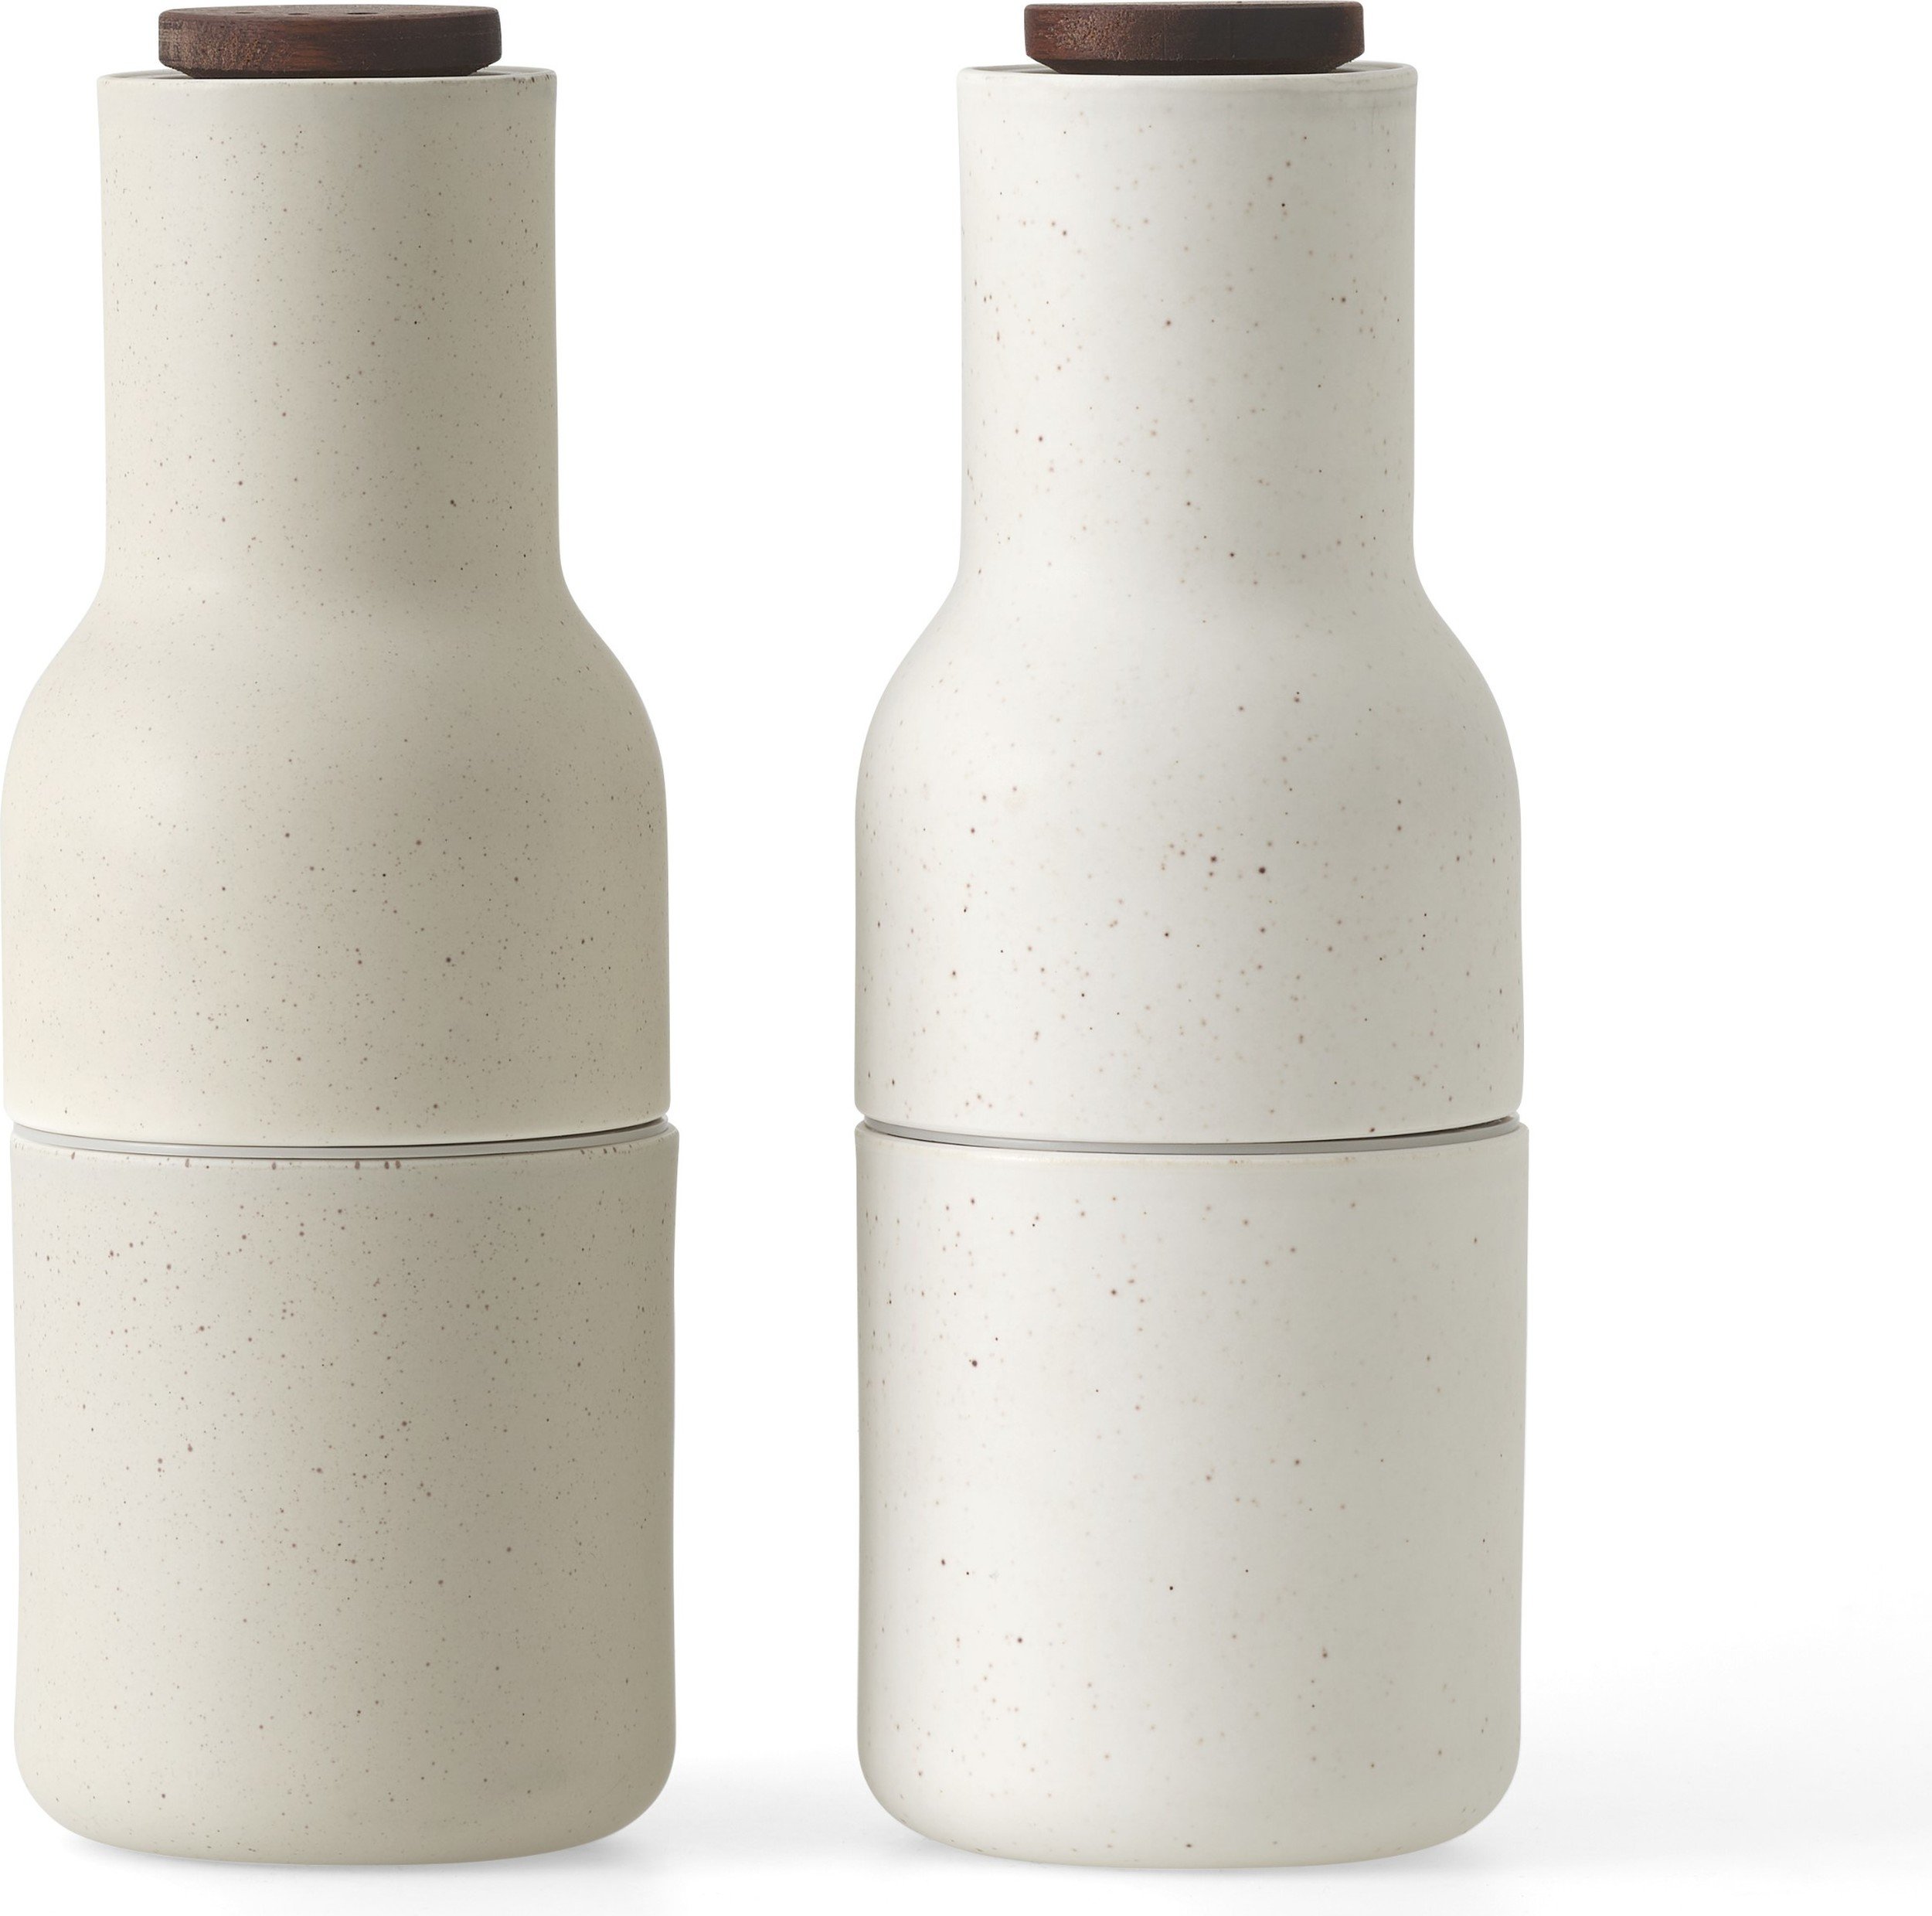 https://3fa-media.com/audo-copenhagen/audo-copenhagen-bottle-grinder-salt-and-pepper-or-spice-mills-sandy-ceramic-2-pcs__104246_9570186-s2500x2500.jpg